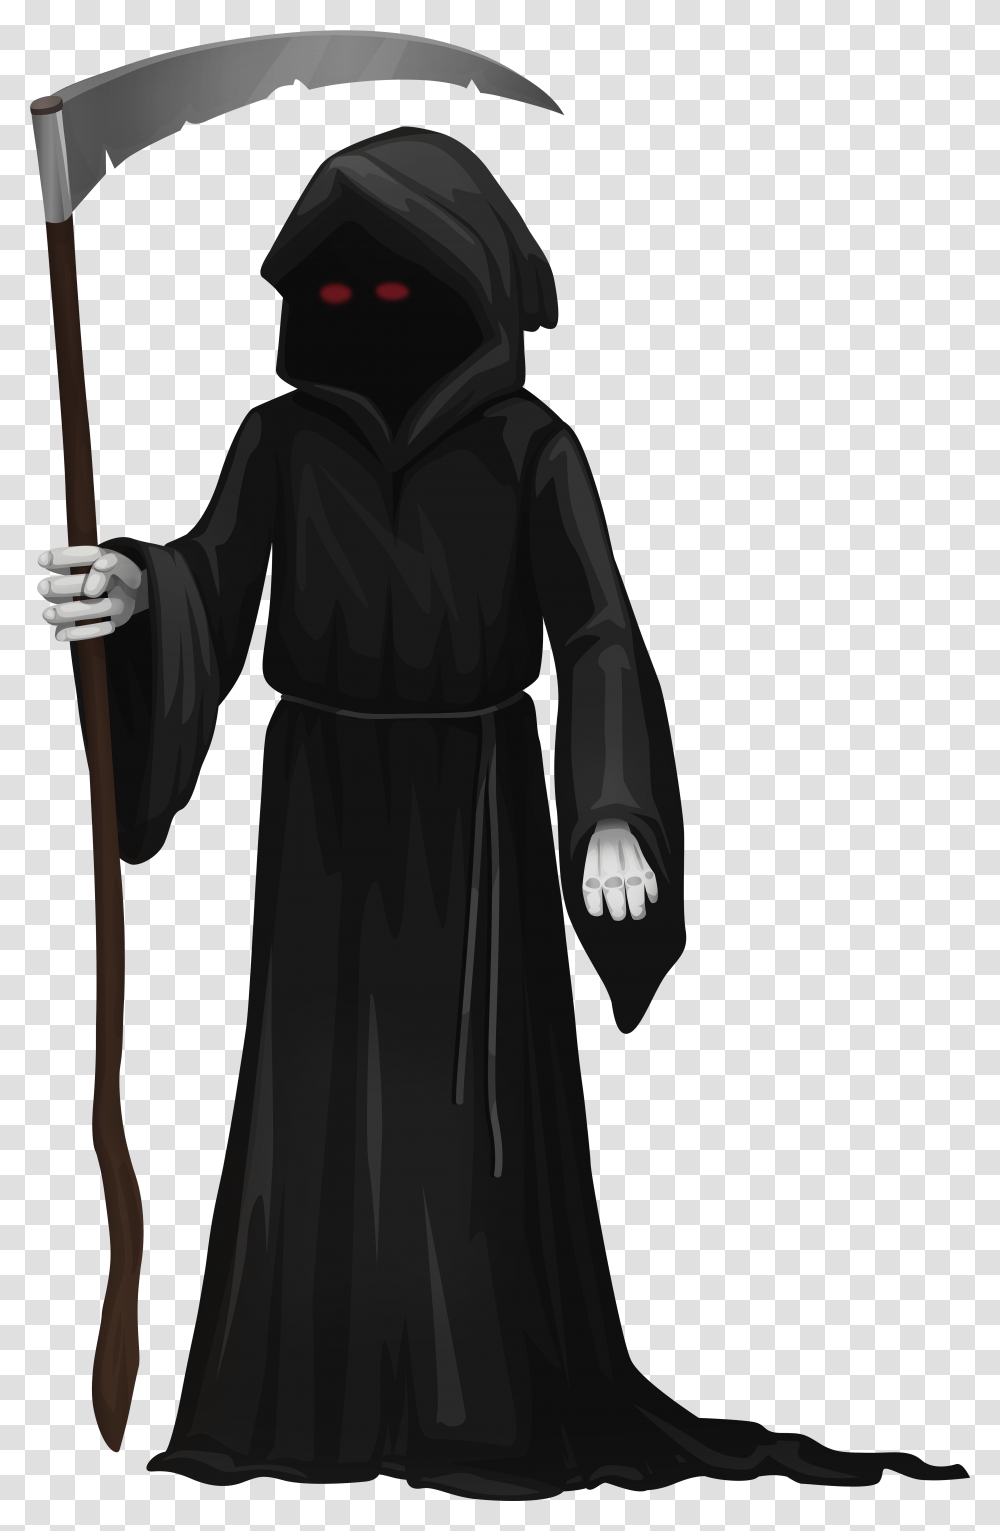 Background Grim Reaper Clipart Grim Reaper, Clothing, Apparel, Costume, Person Transparent Png